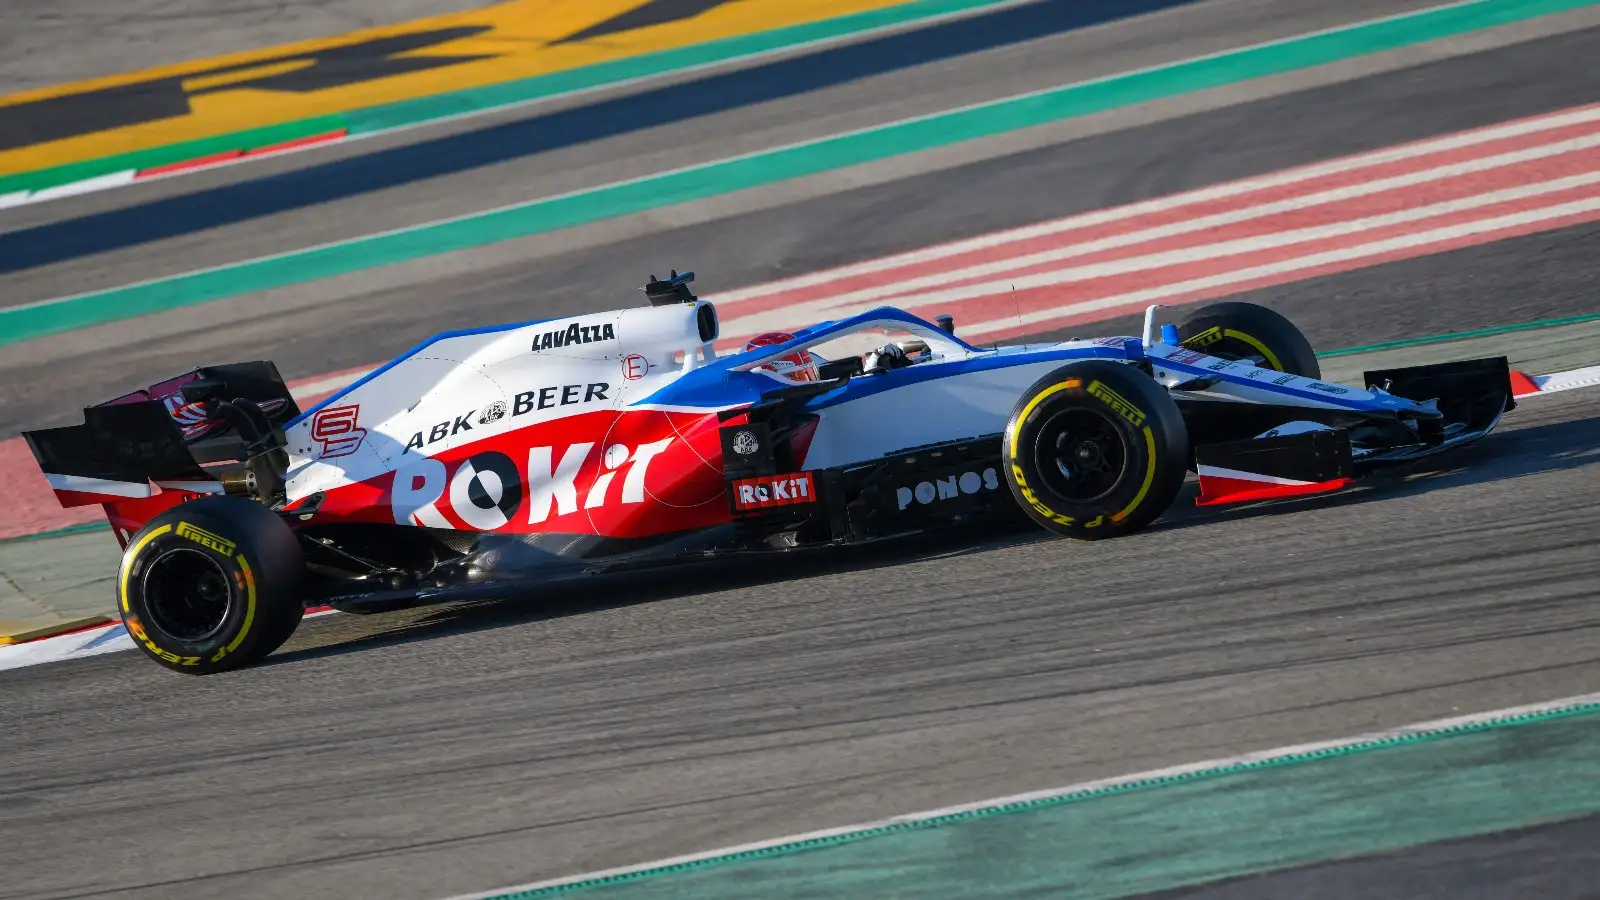 The ROKiT sponsor on the Williams car.